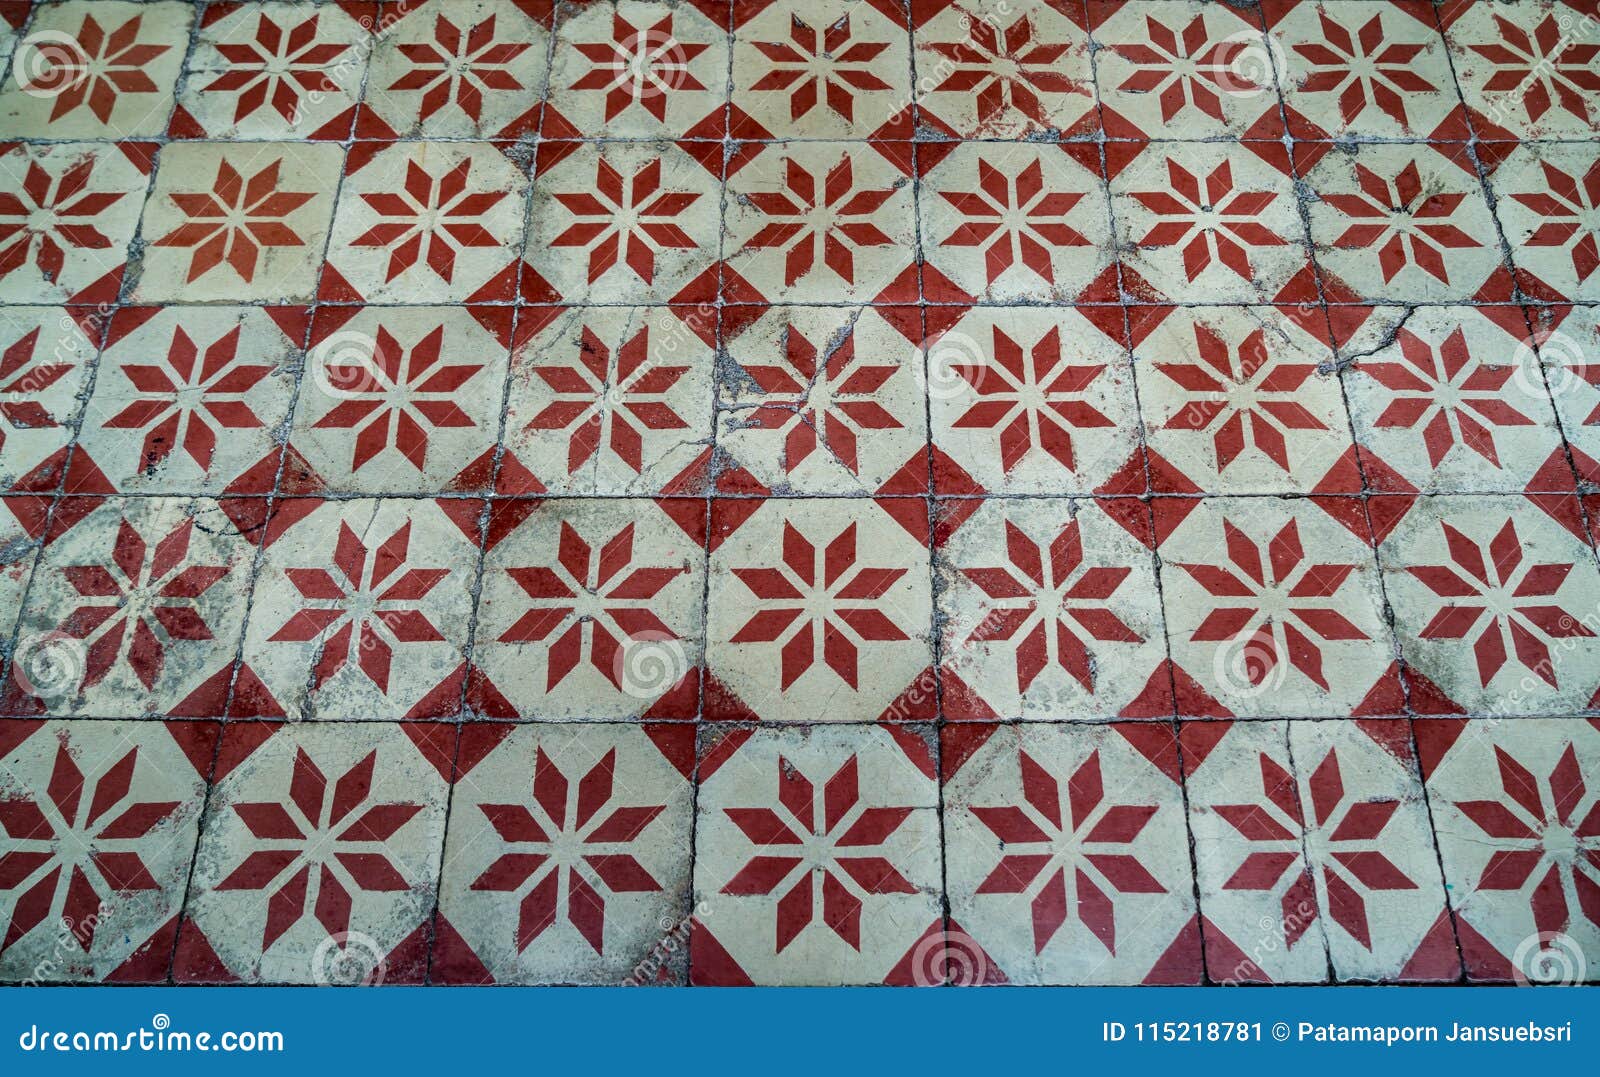 Old Ceramic Tiles Floor Stock Image Image Of Design 115218781